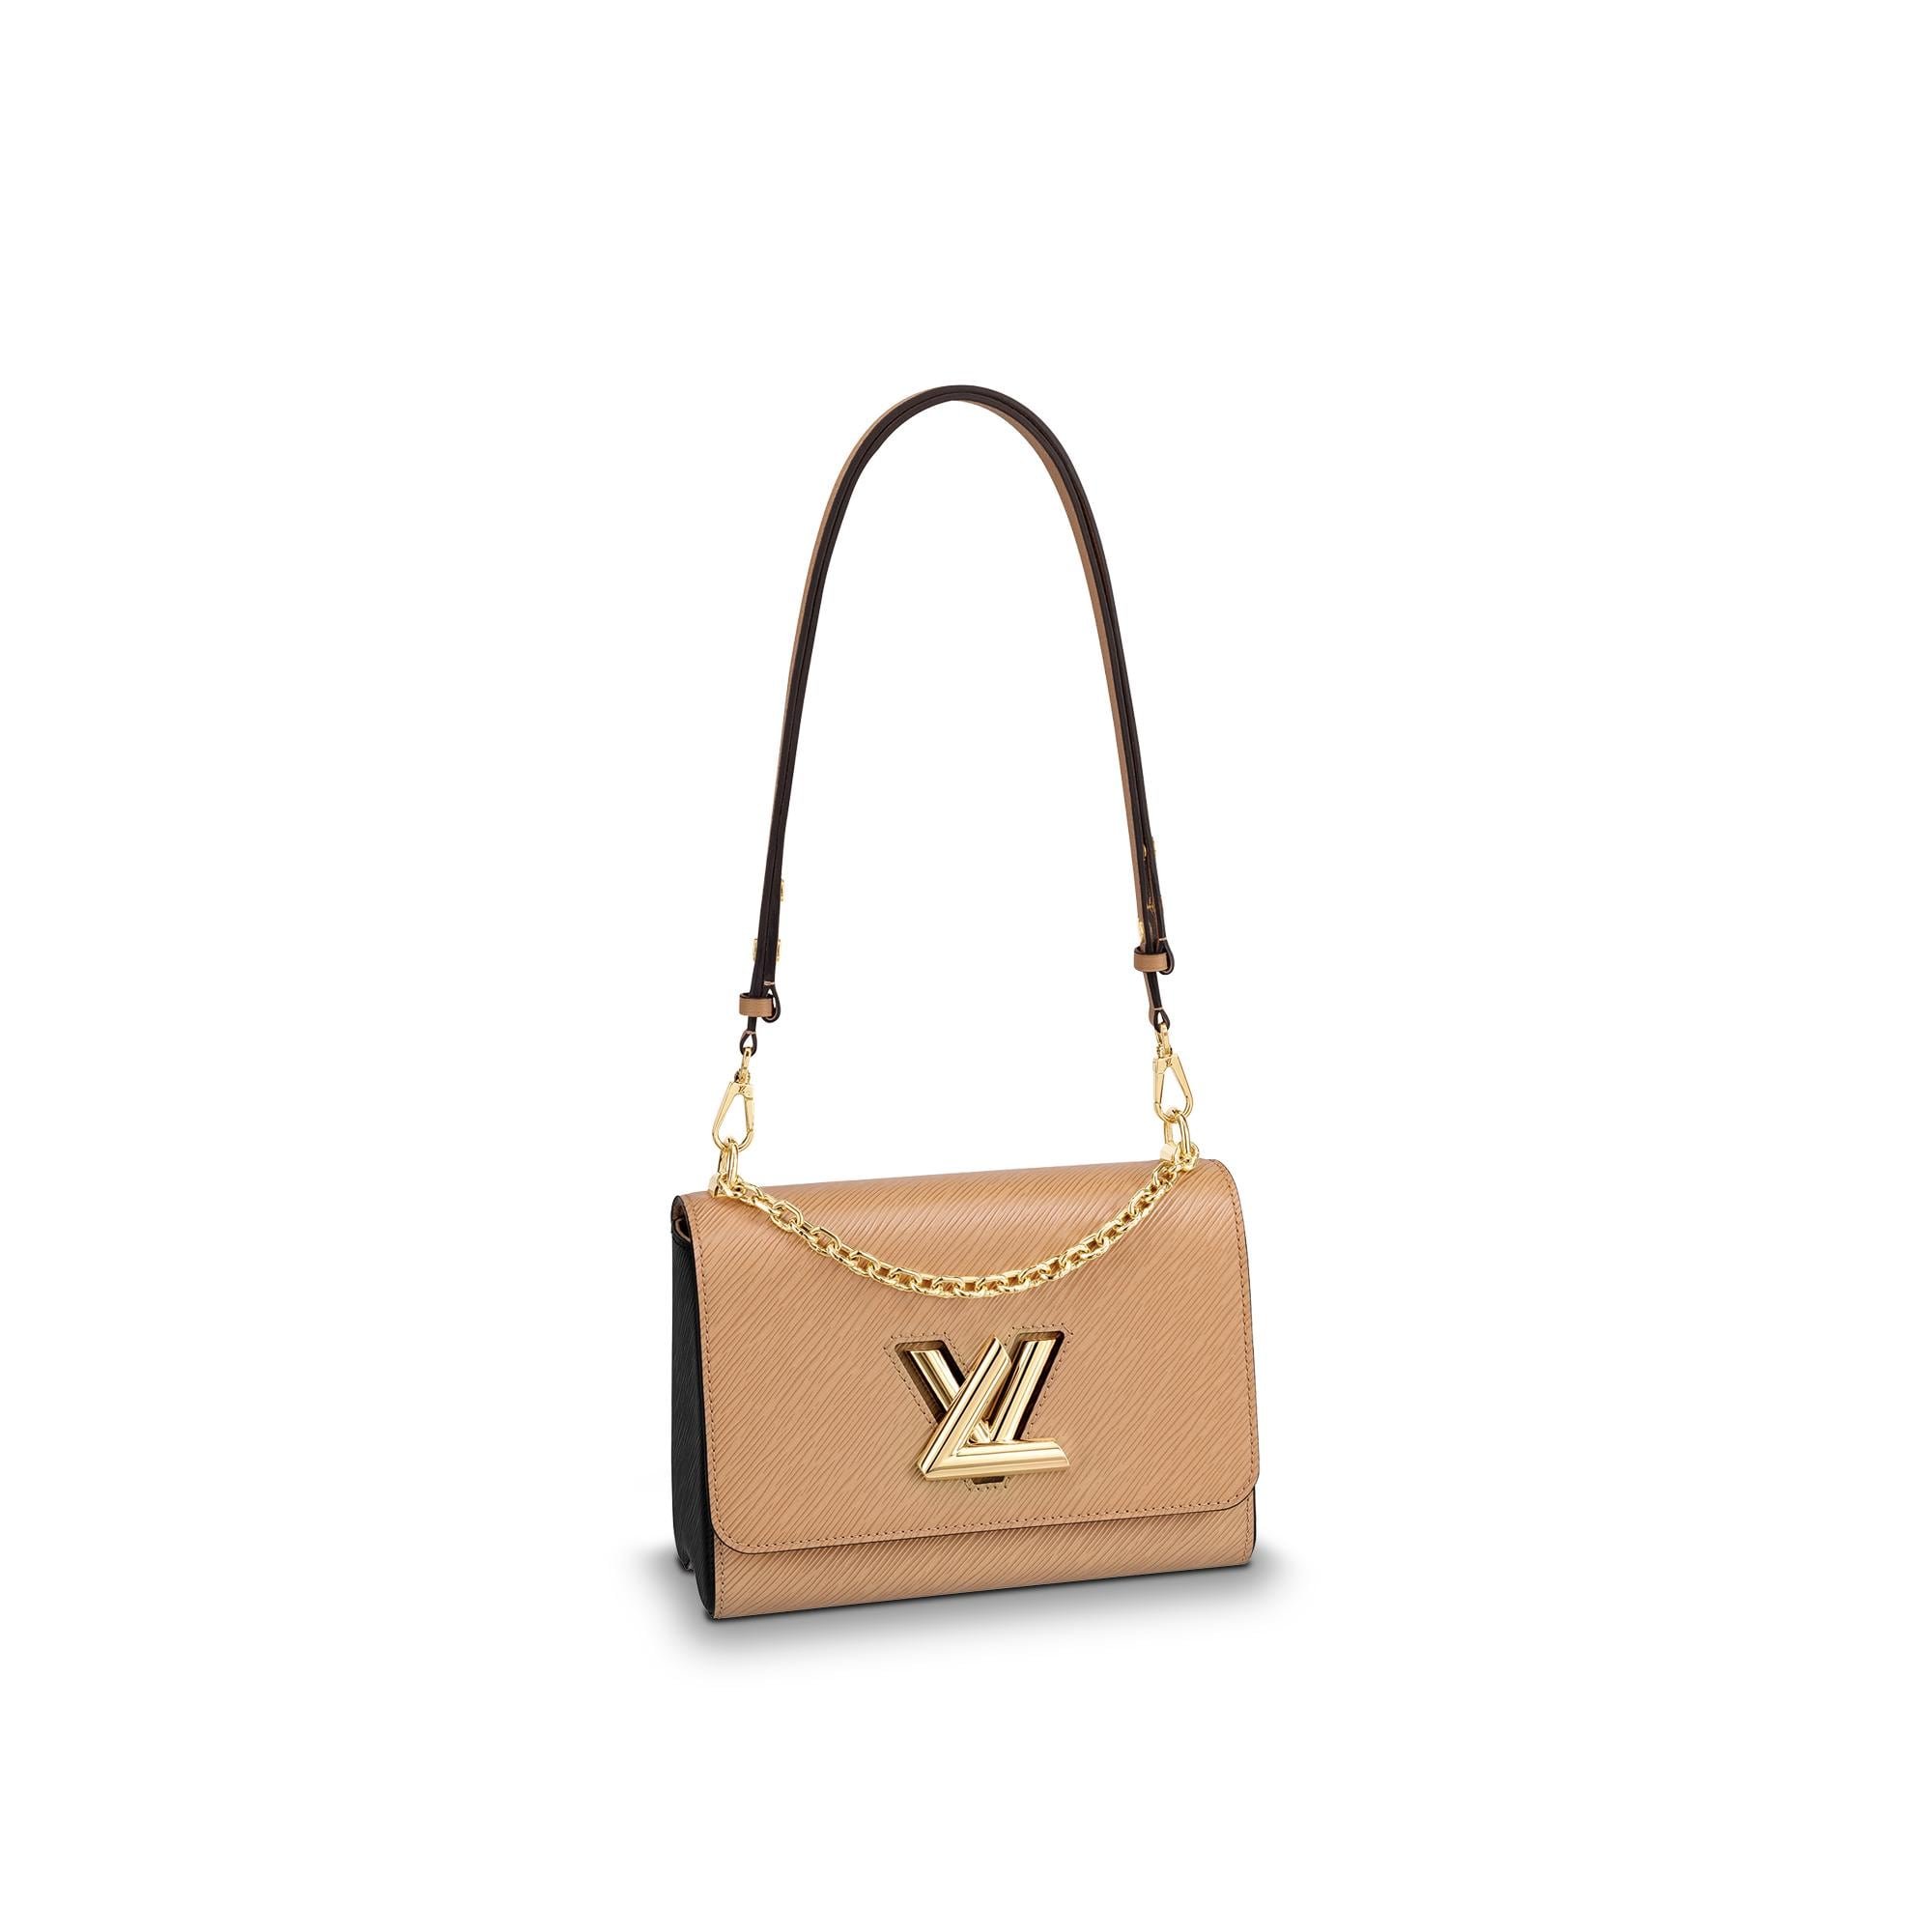 Louis Vuitton Twist Bag in Camel Light Brown Epi Leather.jpg